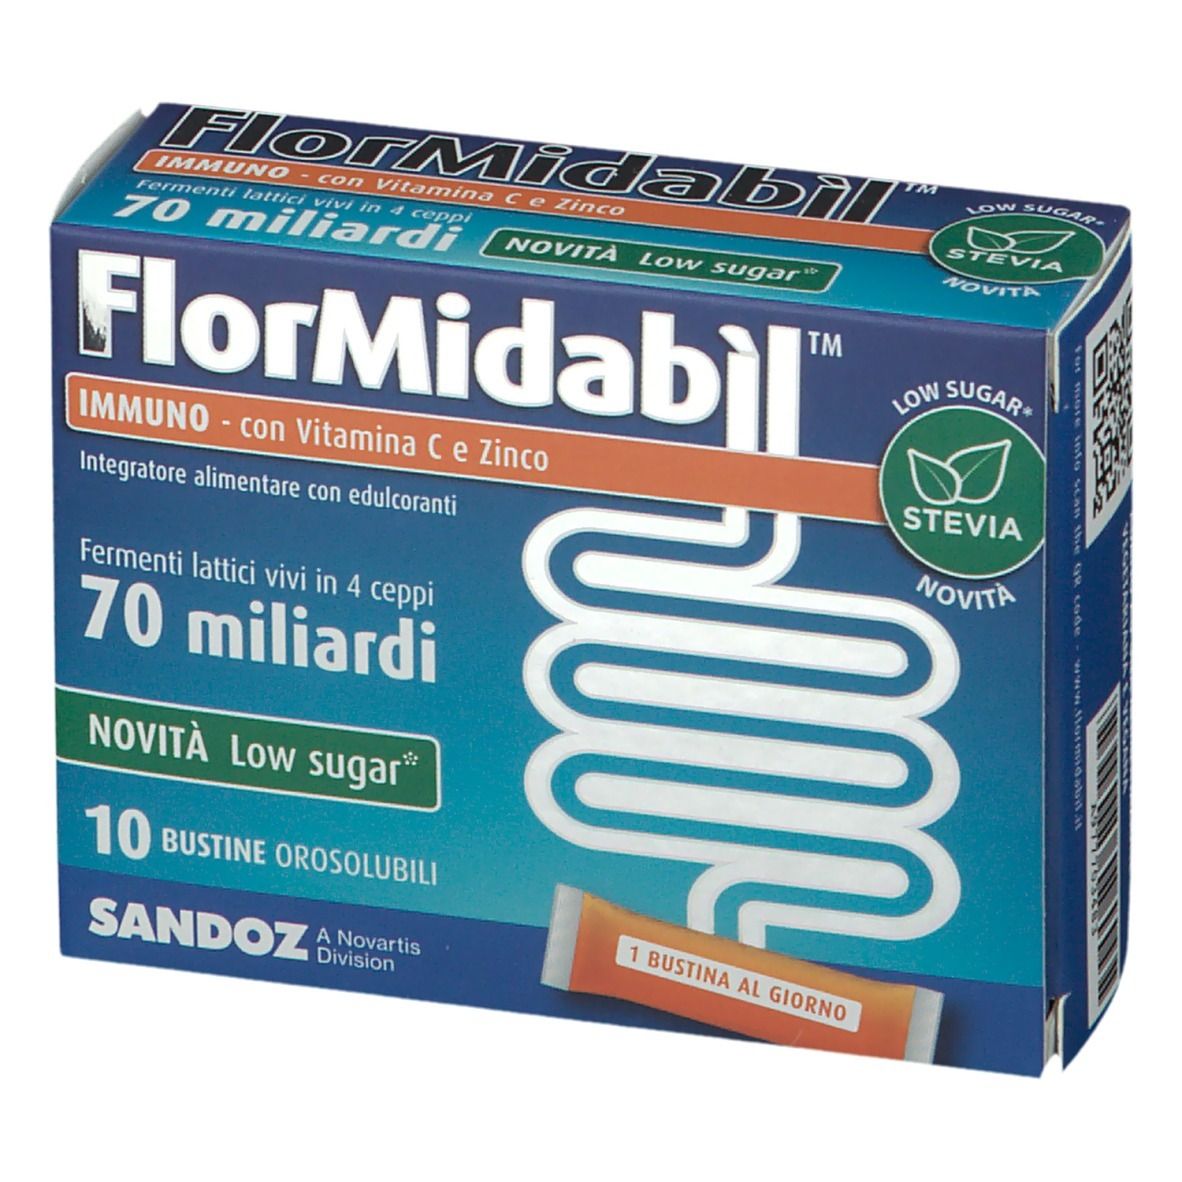 SANDOZ FlorMidabil™ Immuno